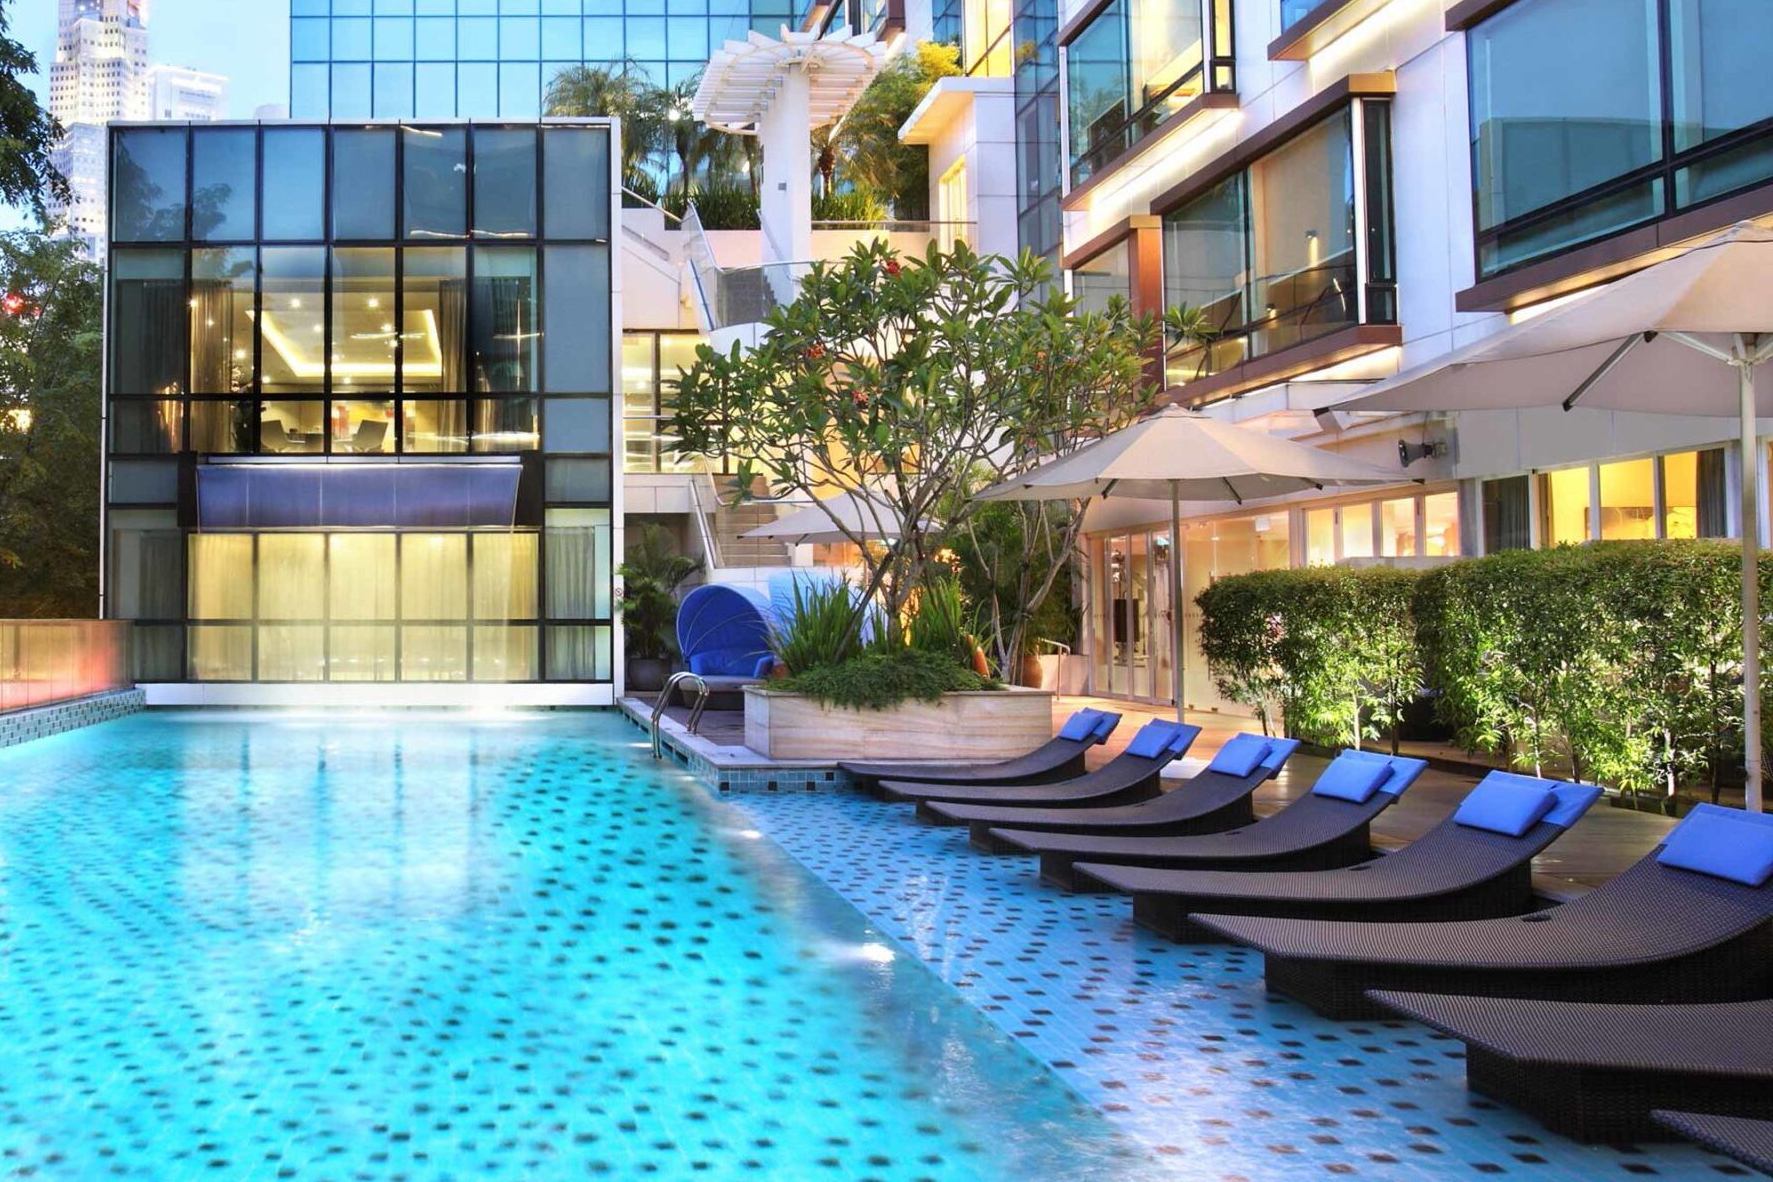 Swimming pool at Park Regis Singapore. Click to enlarge.